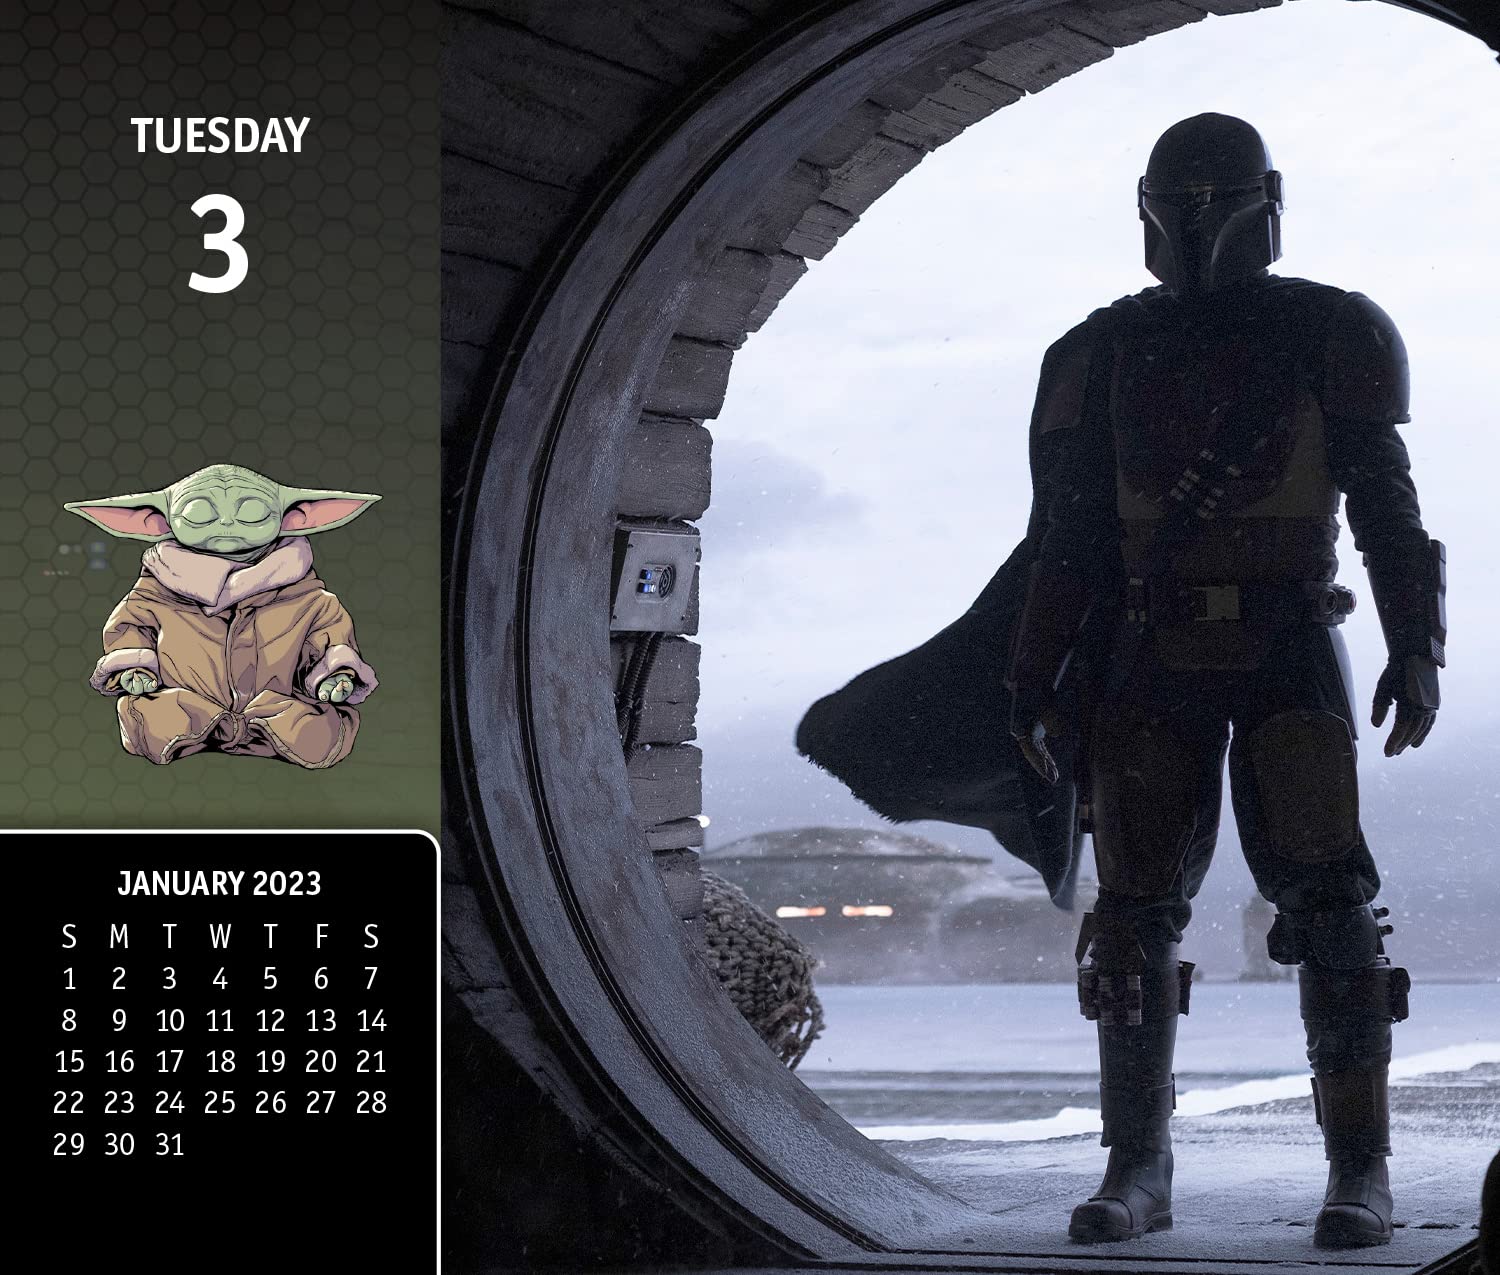 Star Wars The Manadalorian Daily Tear Off Calendar Box year 2023画像